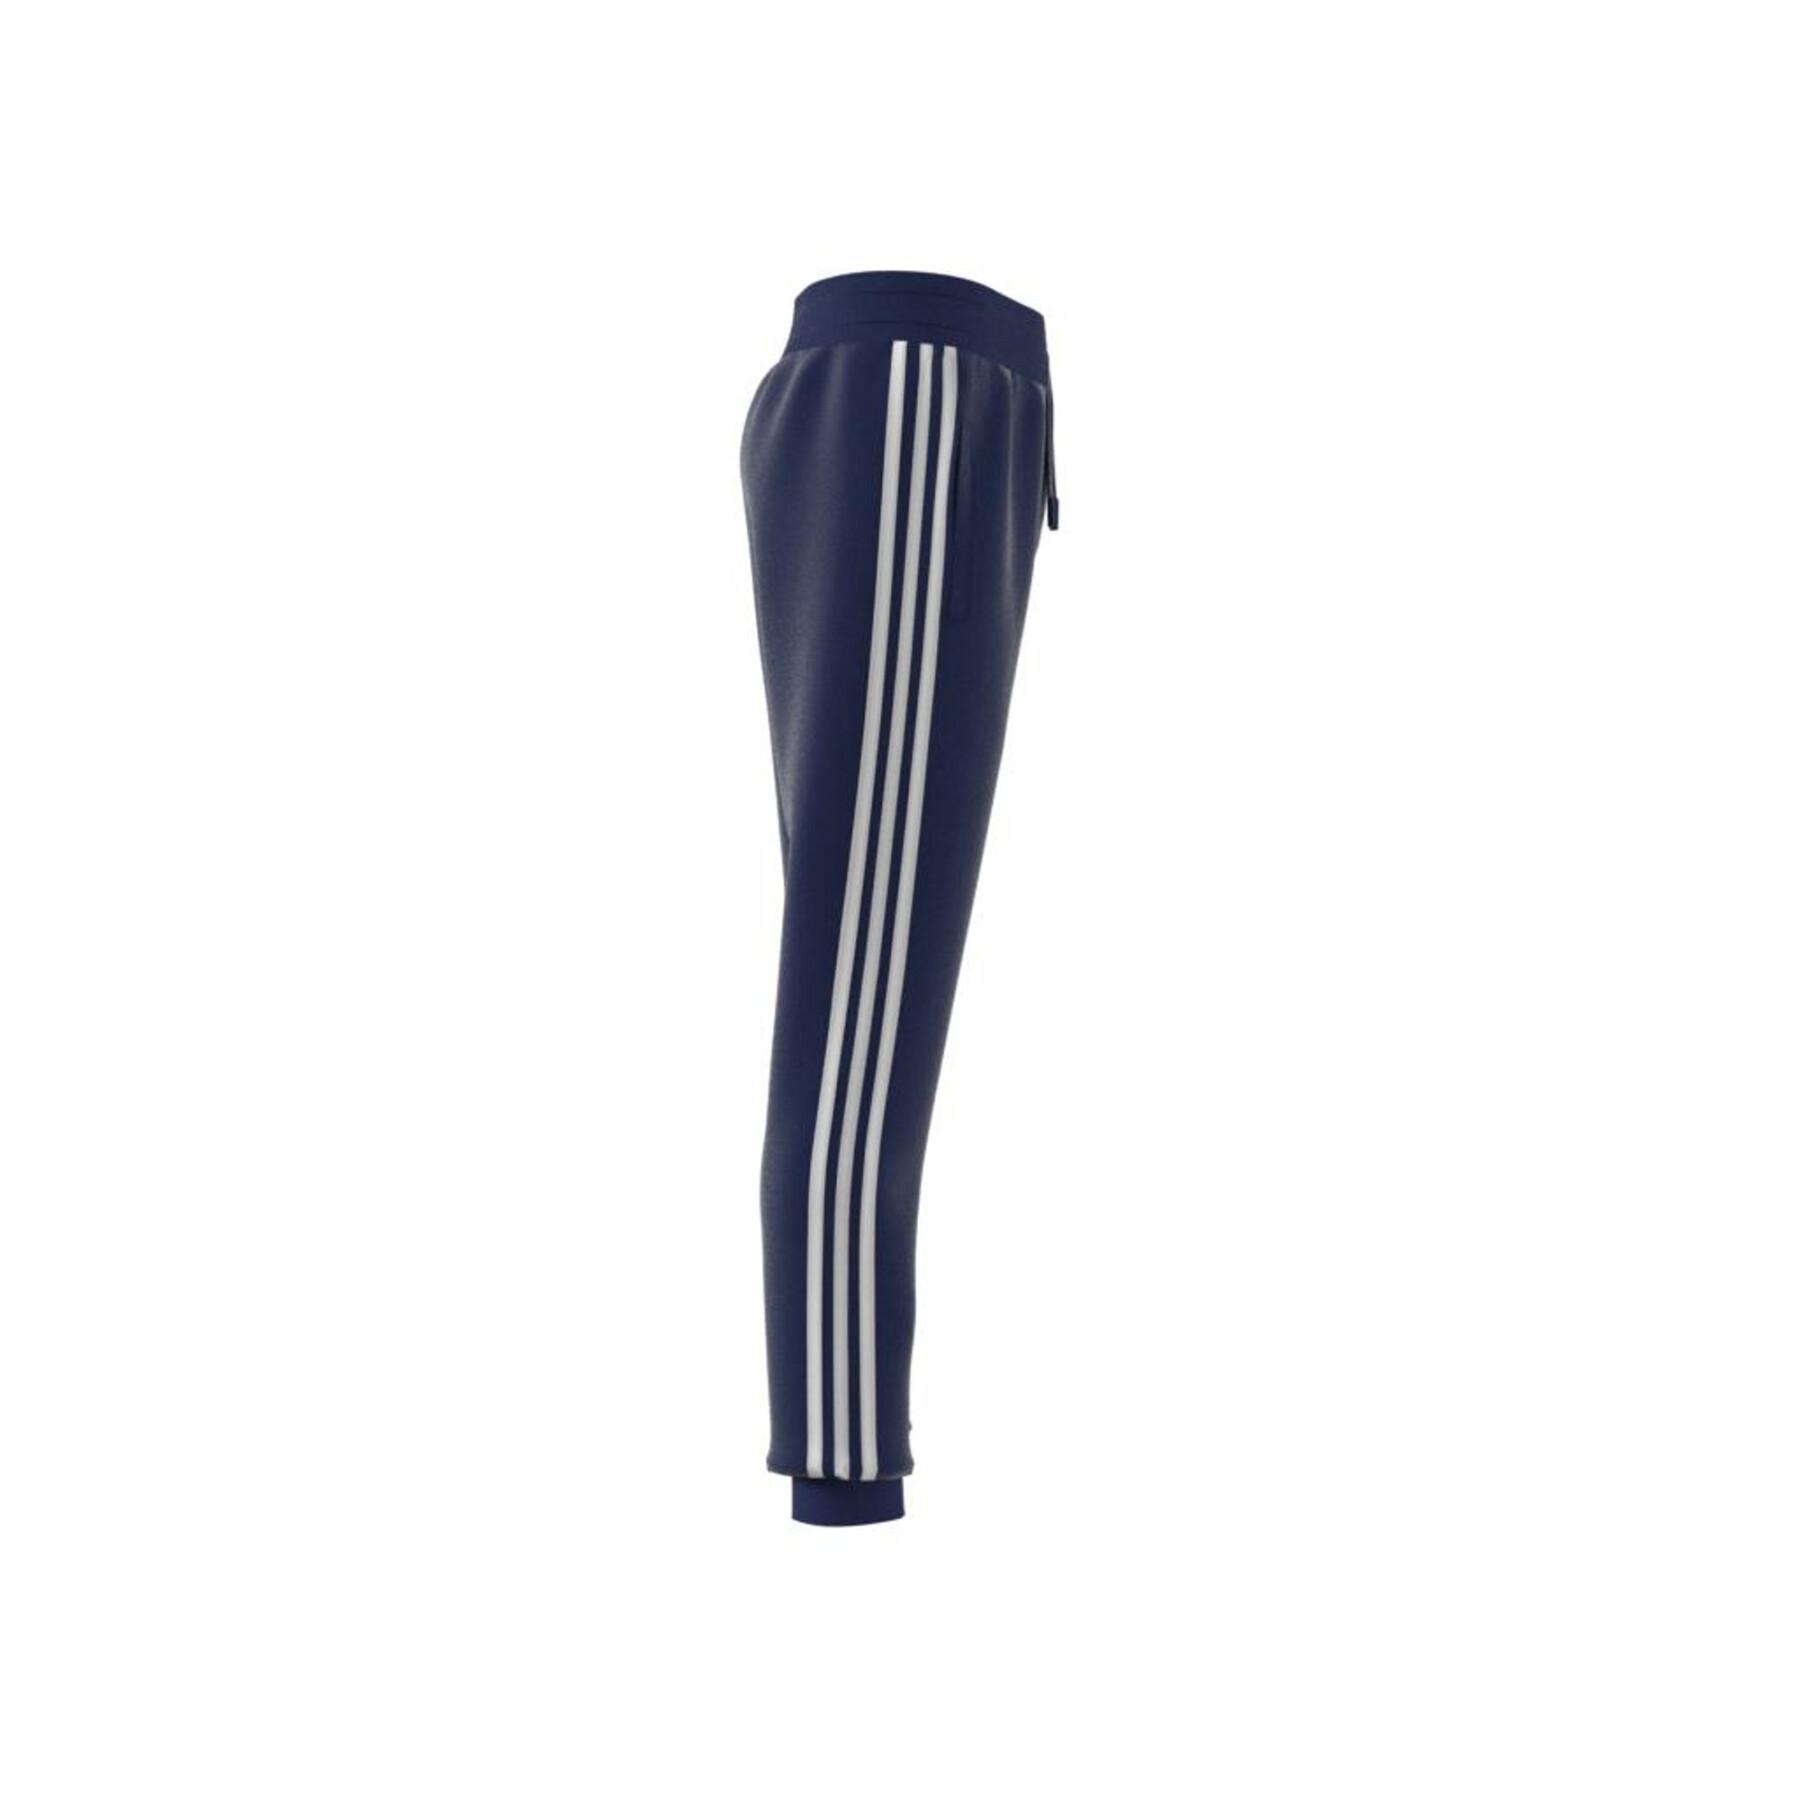 Pantalones de deporte para niños adidas Originals 3-Stripes